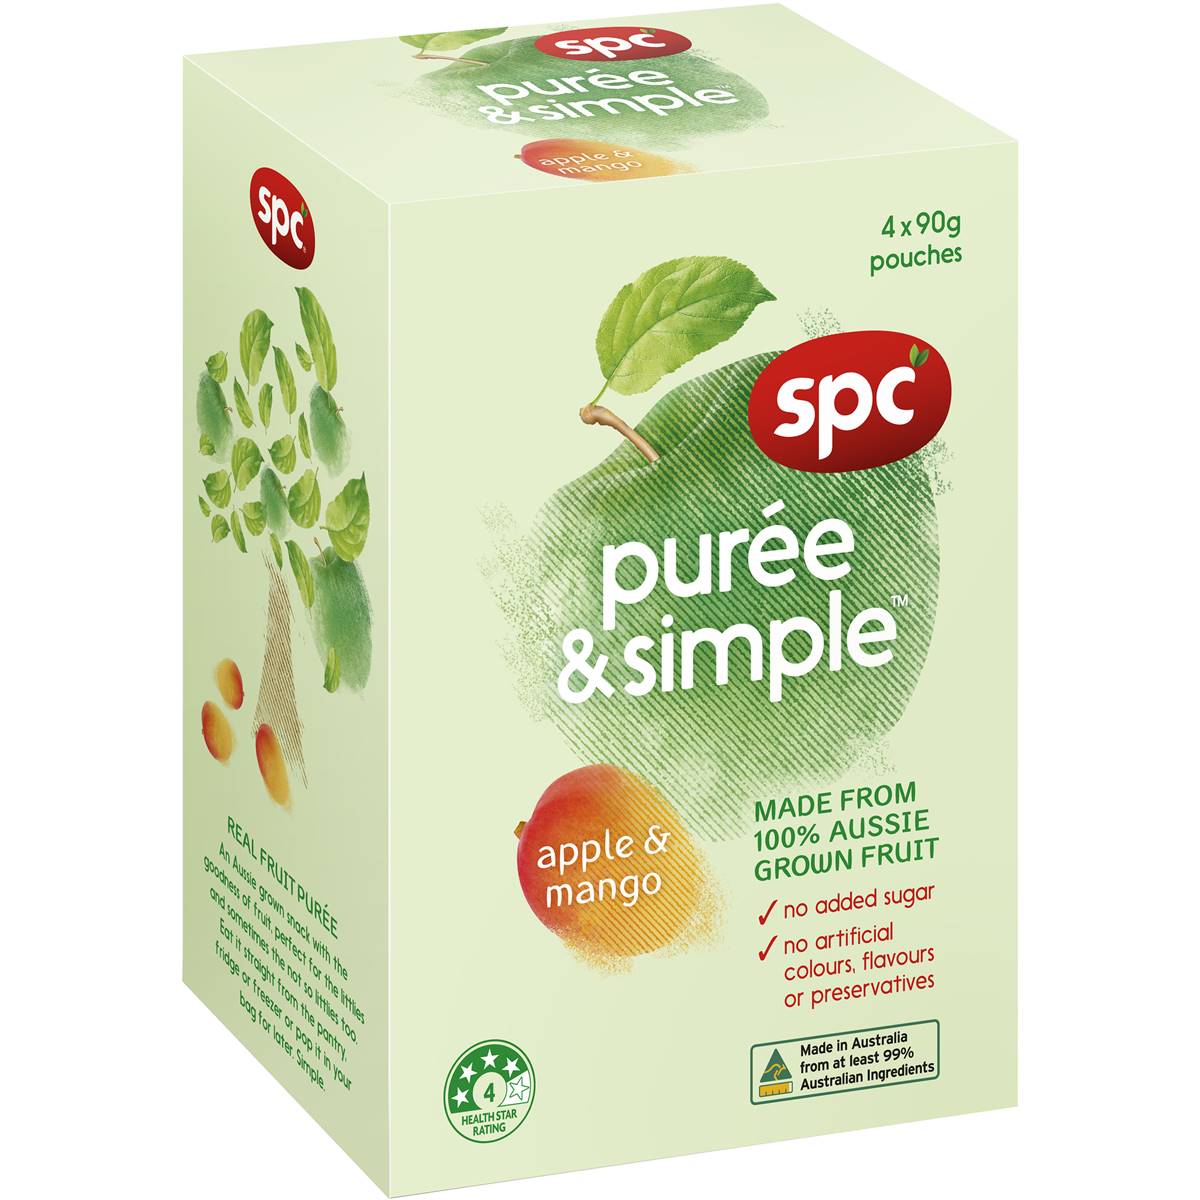 Calories in Spc Puree & Simple Apple & Mango Fruit Puree Pouch